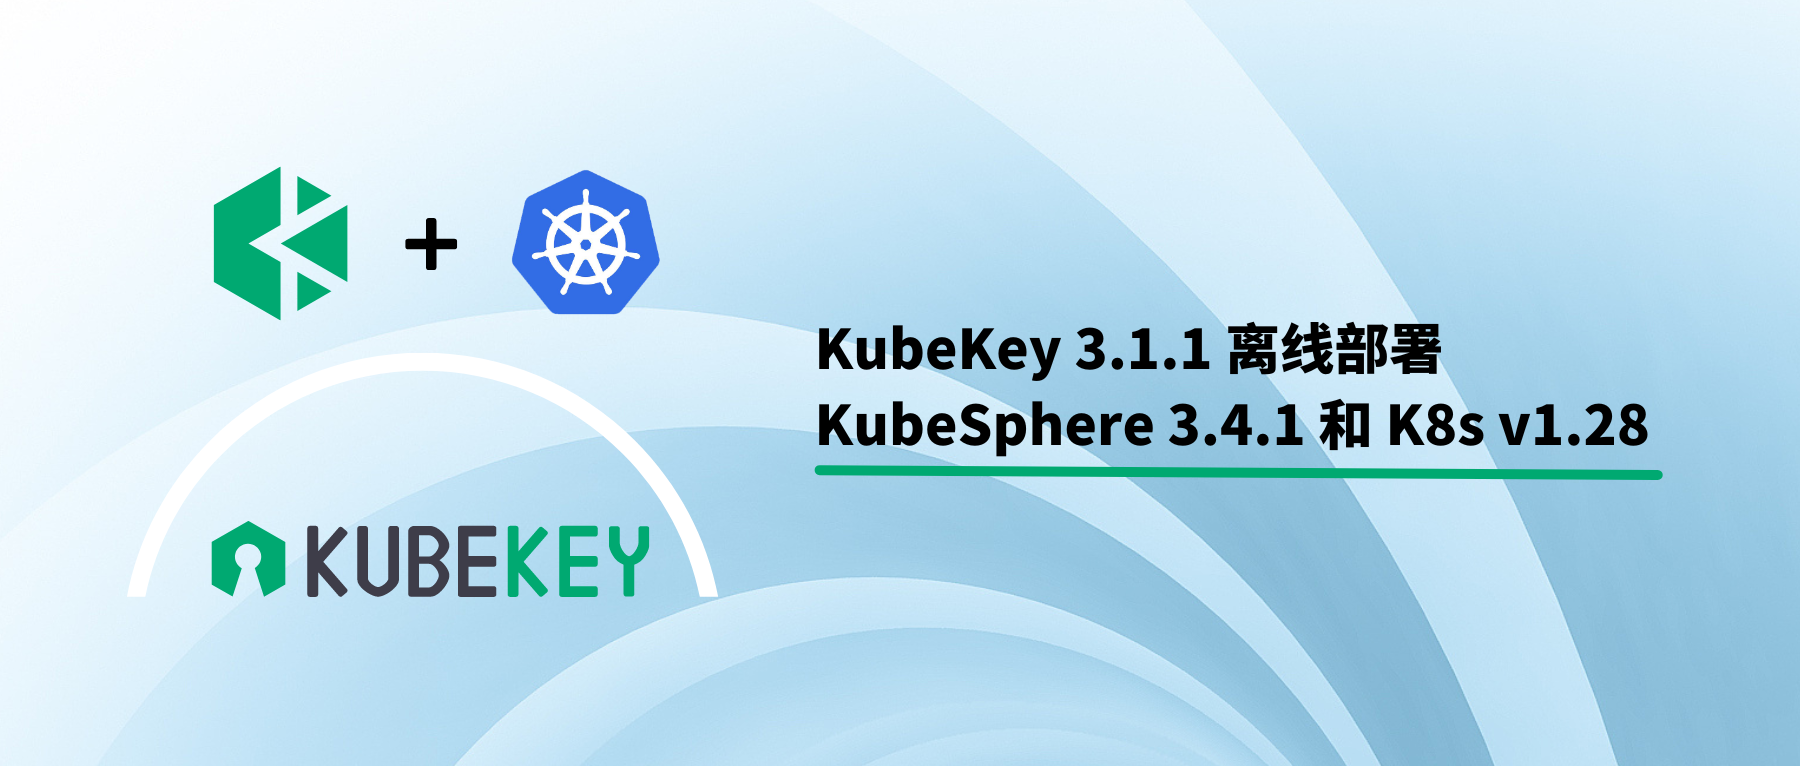 一文搞定 KubeKey 3.1.1 离线部署 KubeSphere 3.4.1 和 Kubernetes v1.28